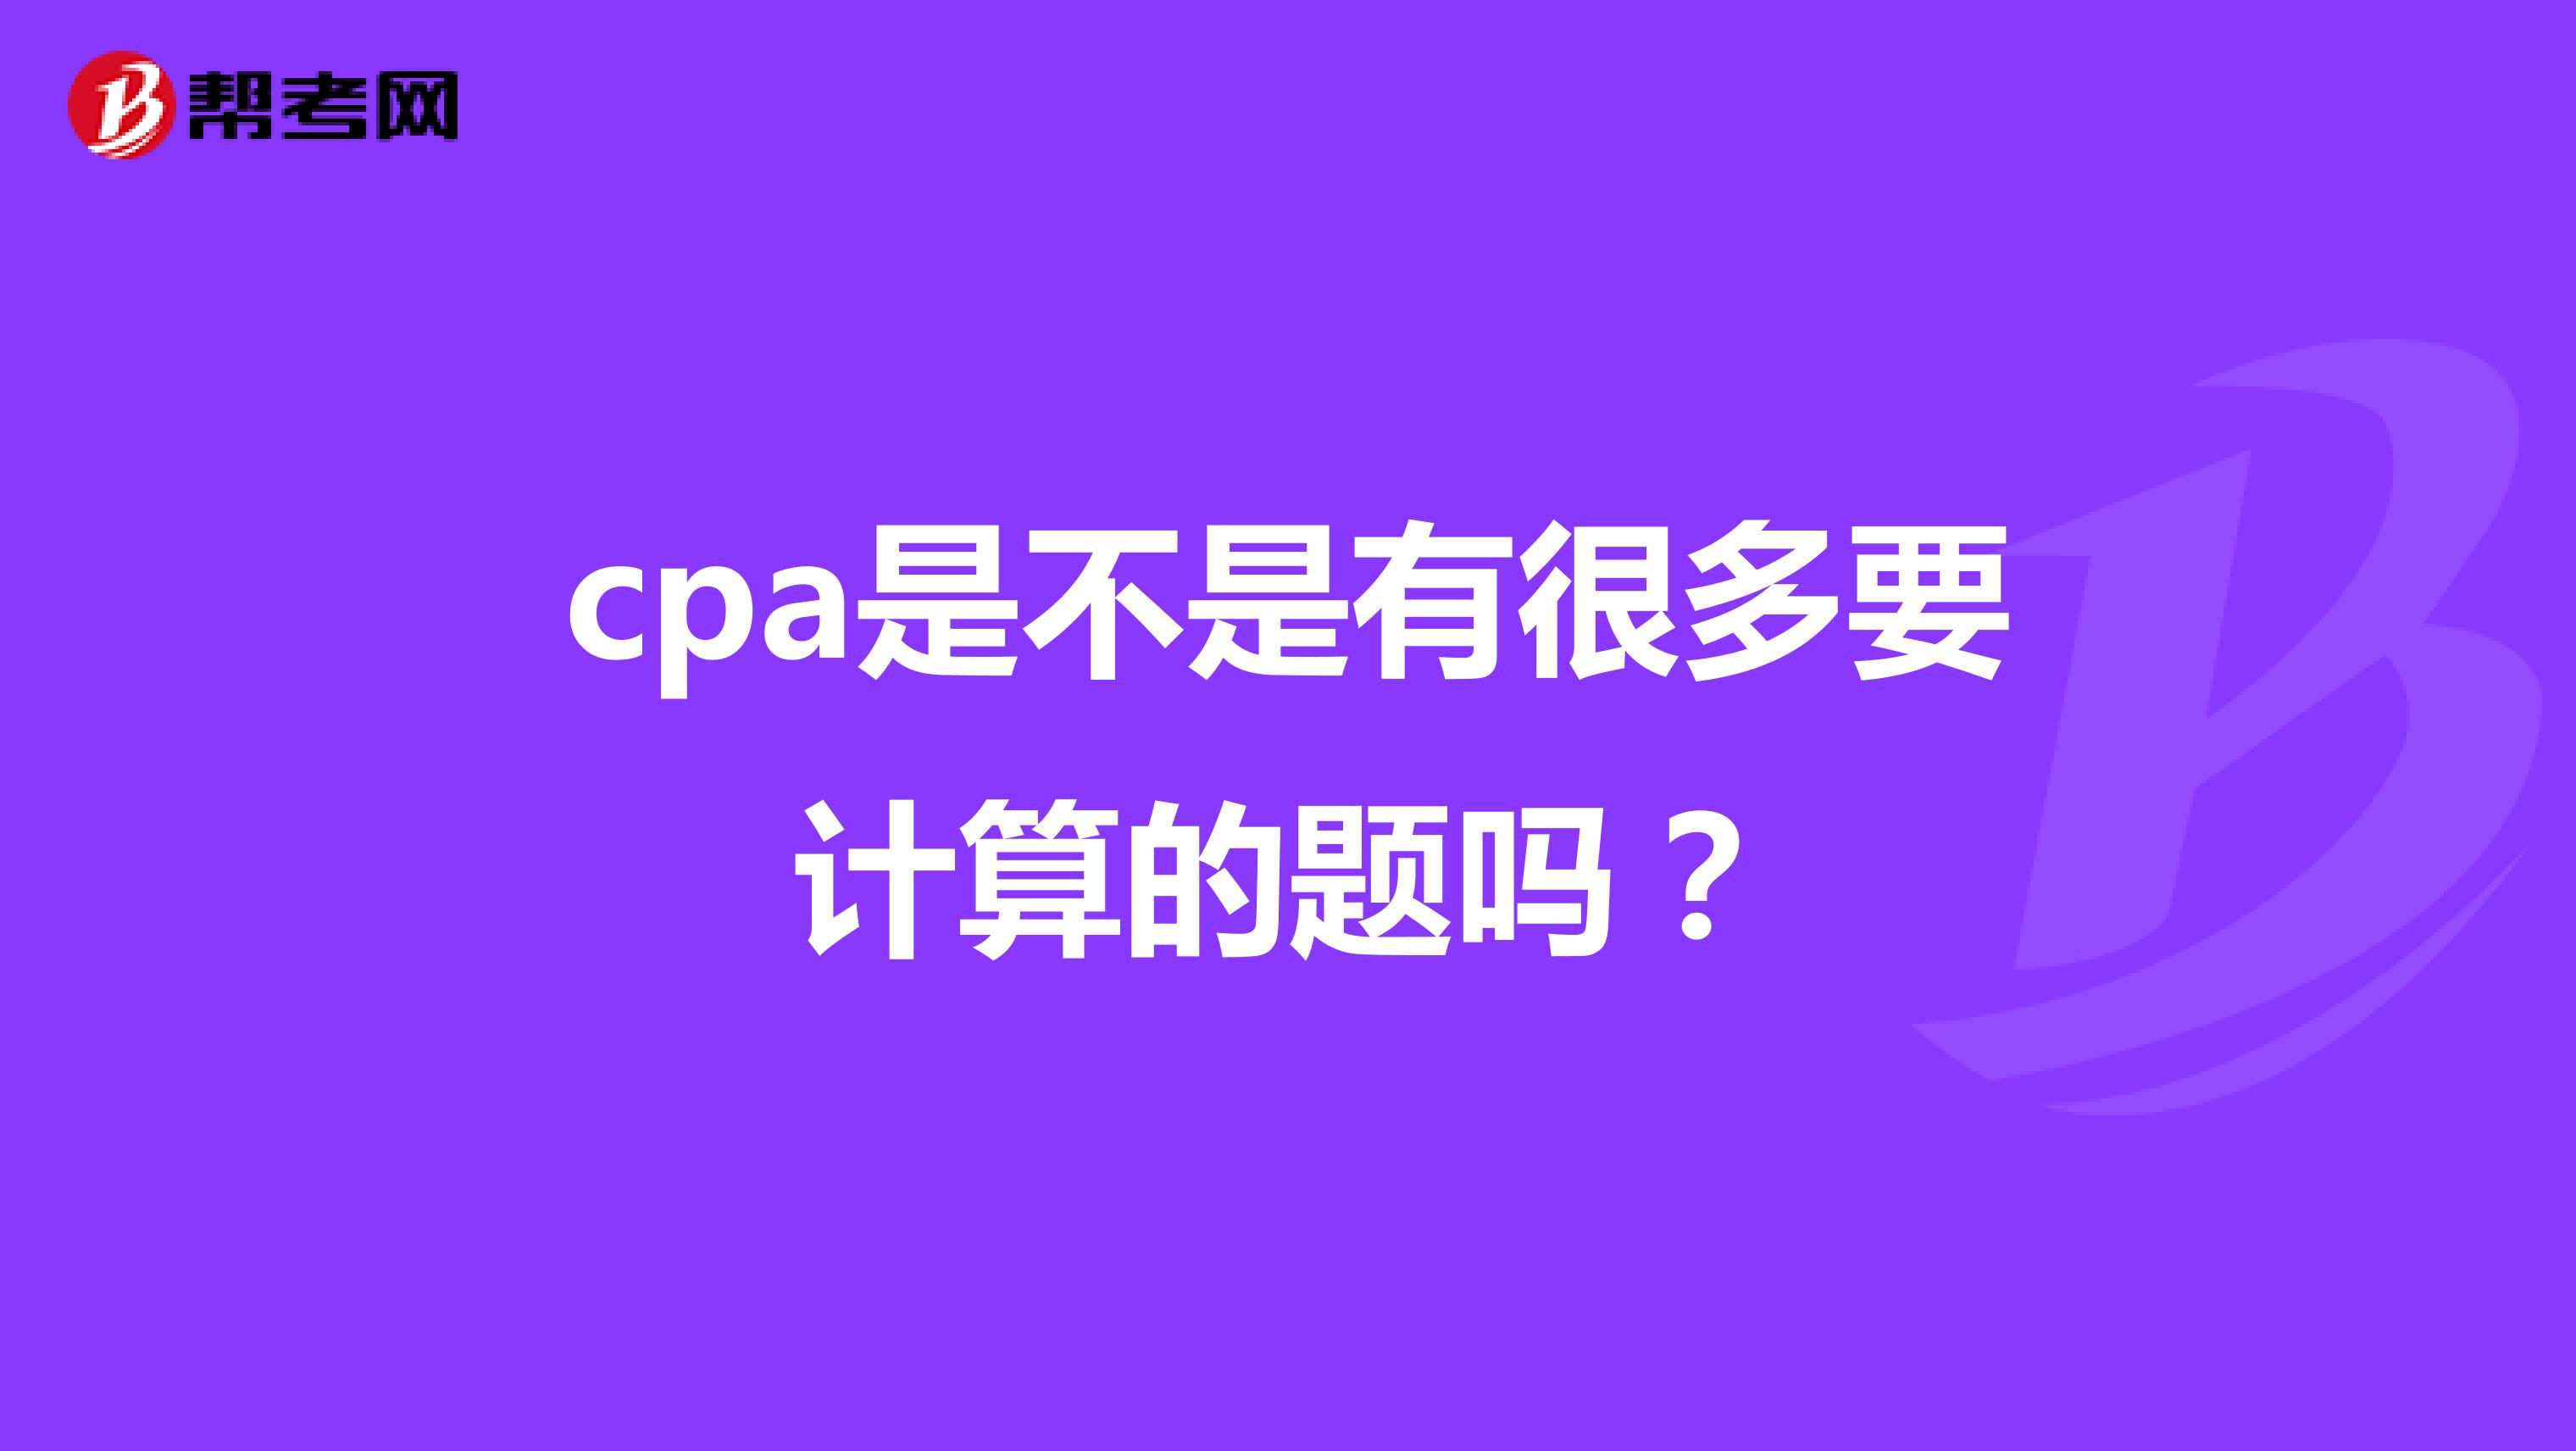 cpa是不是有很多要计算的题吗？